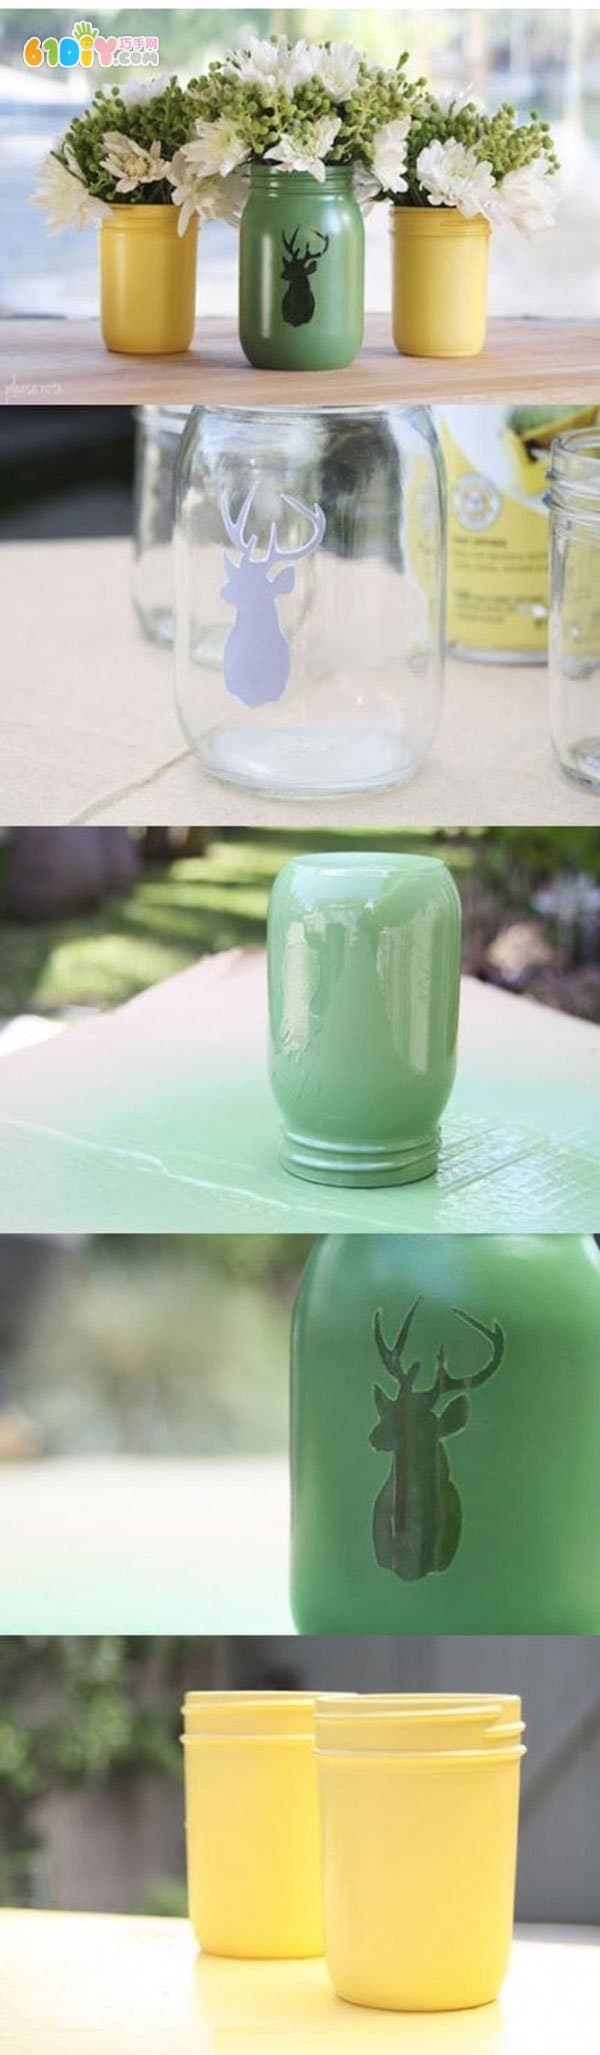 Waste glass bottle to make decorative vase